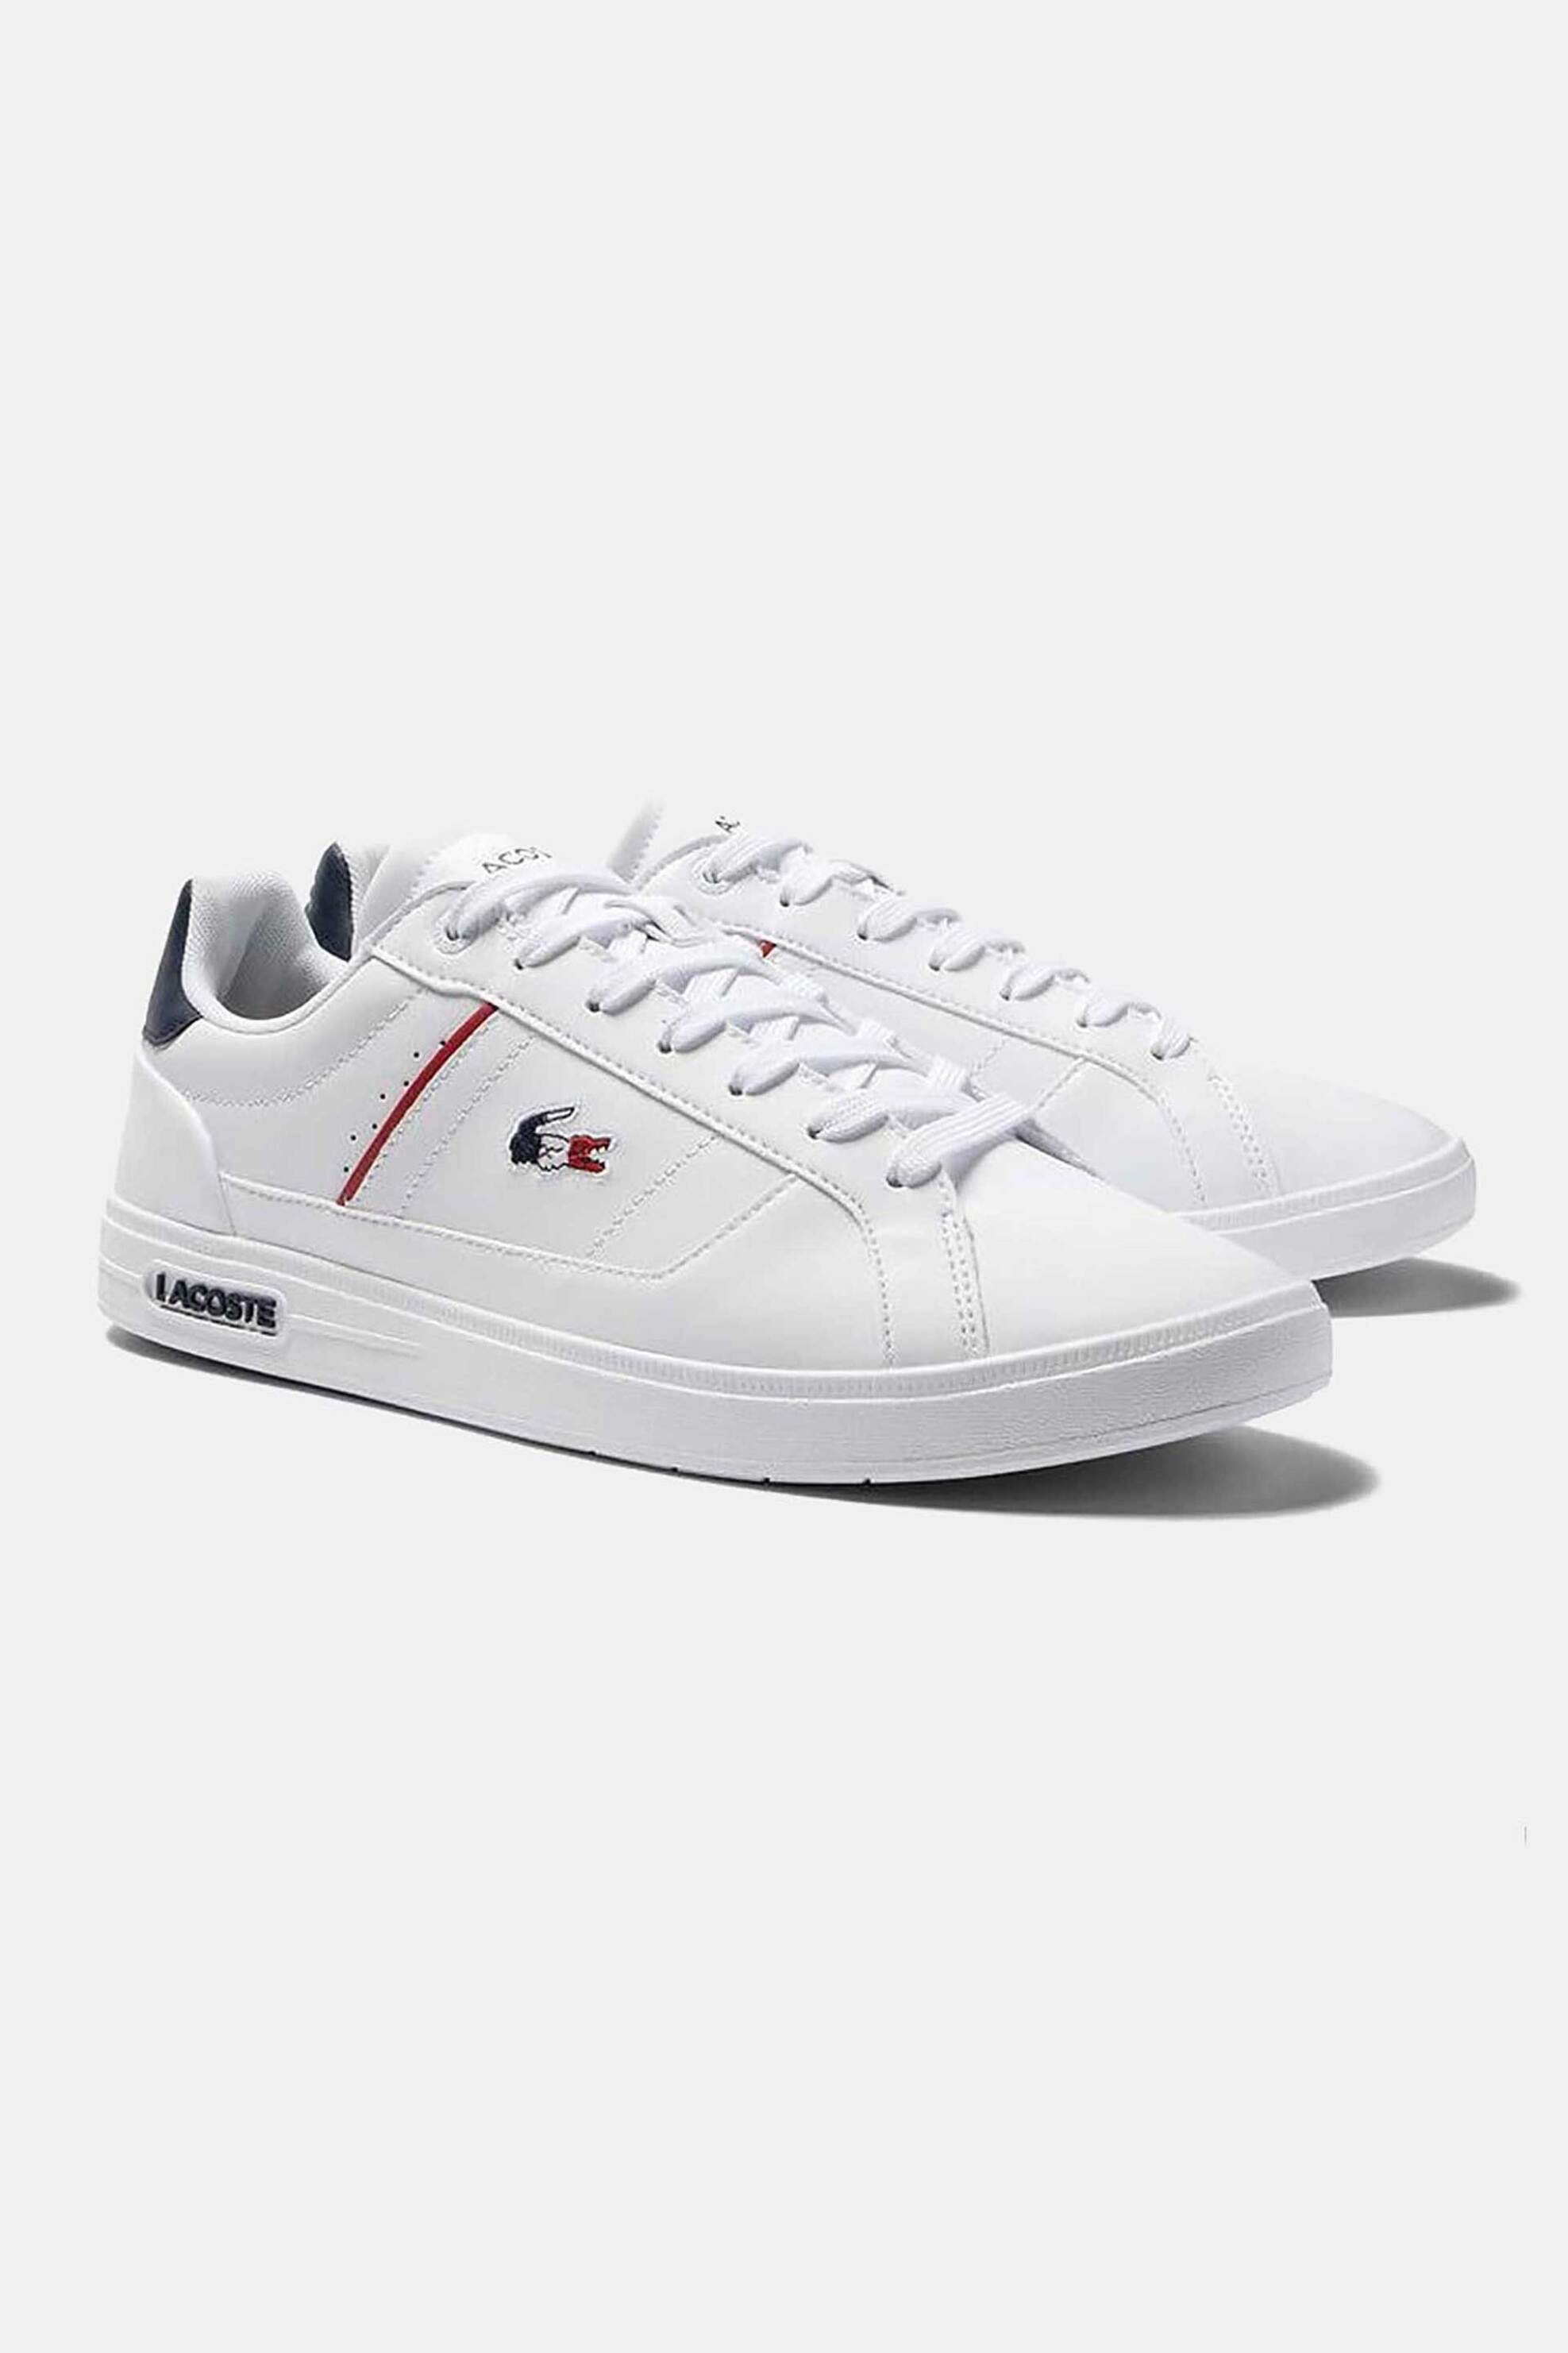 Lacoste ανδρικά sneakers με contrast λεπτομέρειες και λογότυπο "Pro Tri 123" - 45SMA0117407 Λευκό 37-45SMA0117407|0000|8